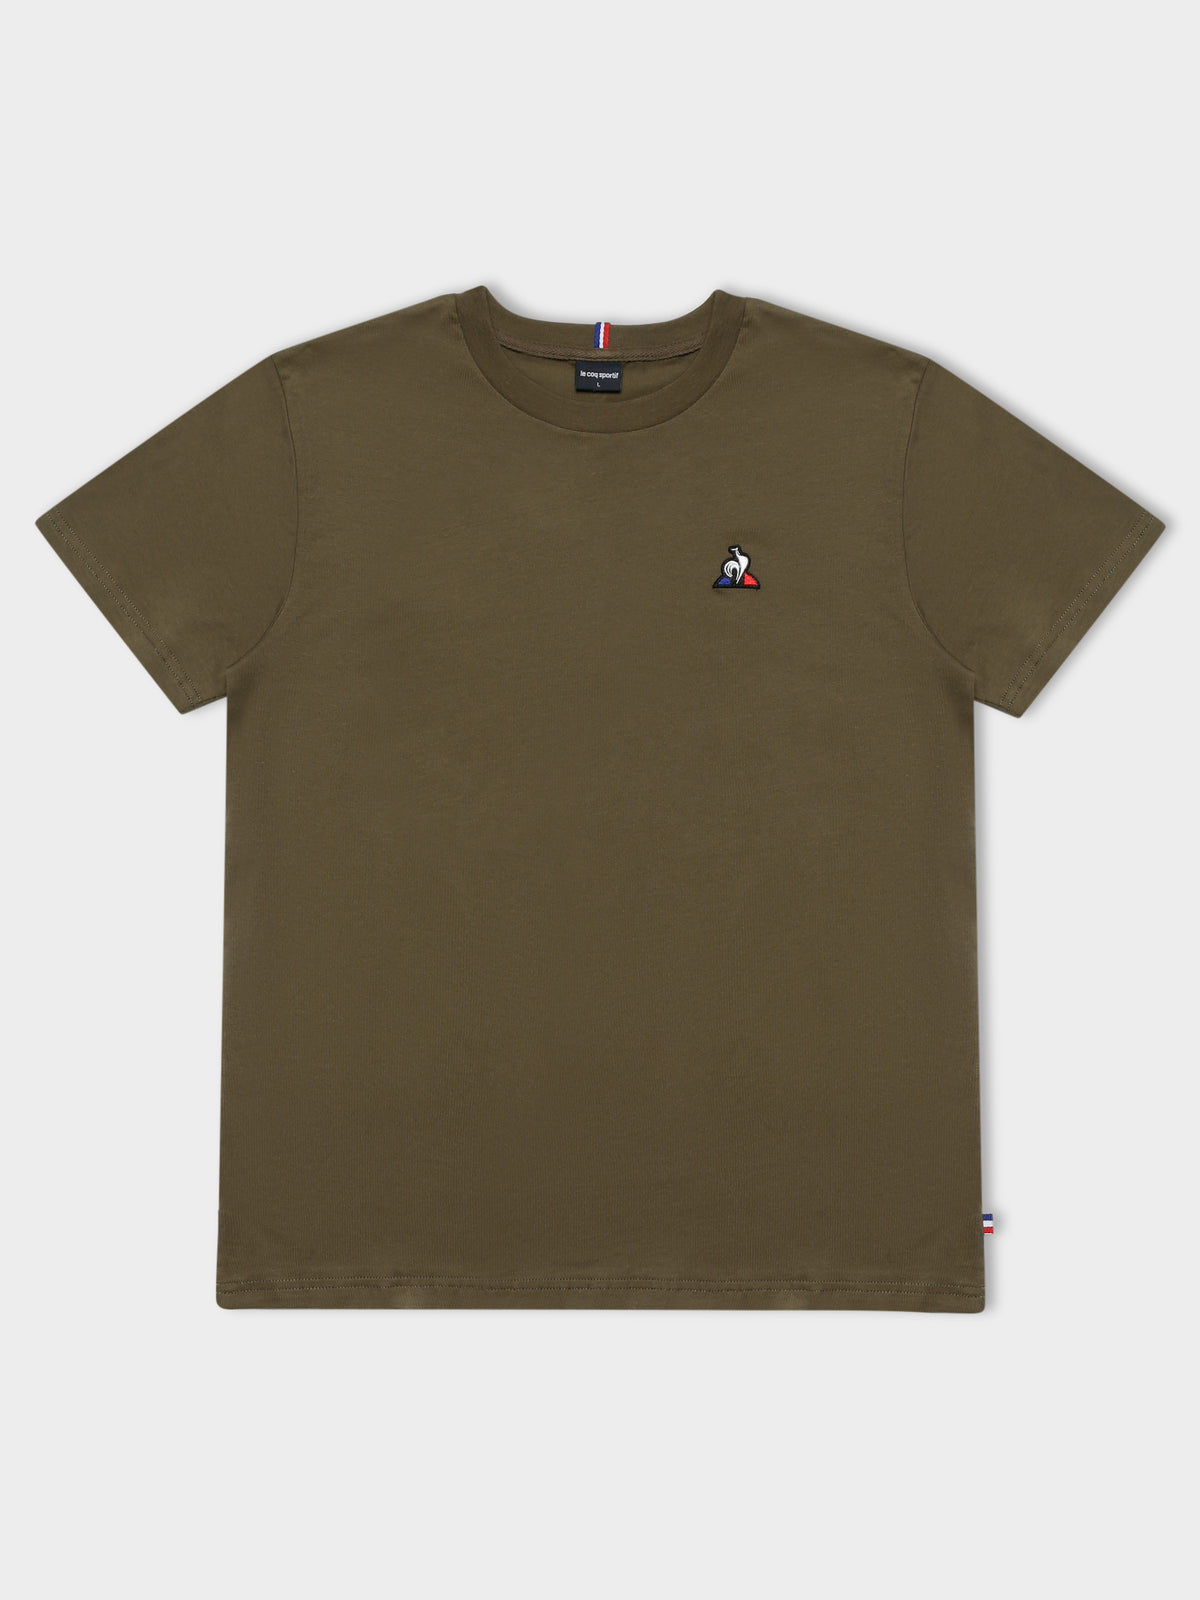 Essential T-Shirt in Khaki Green